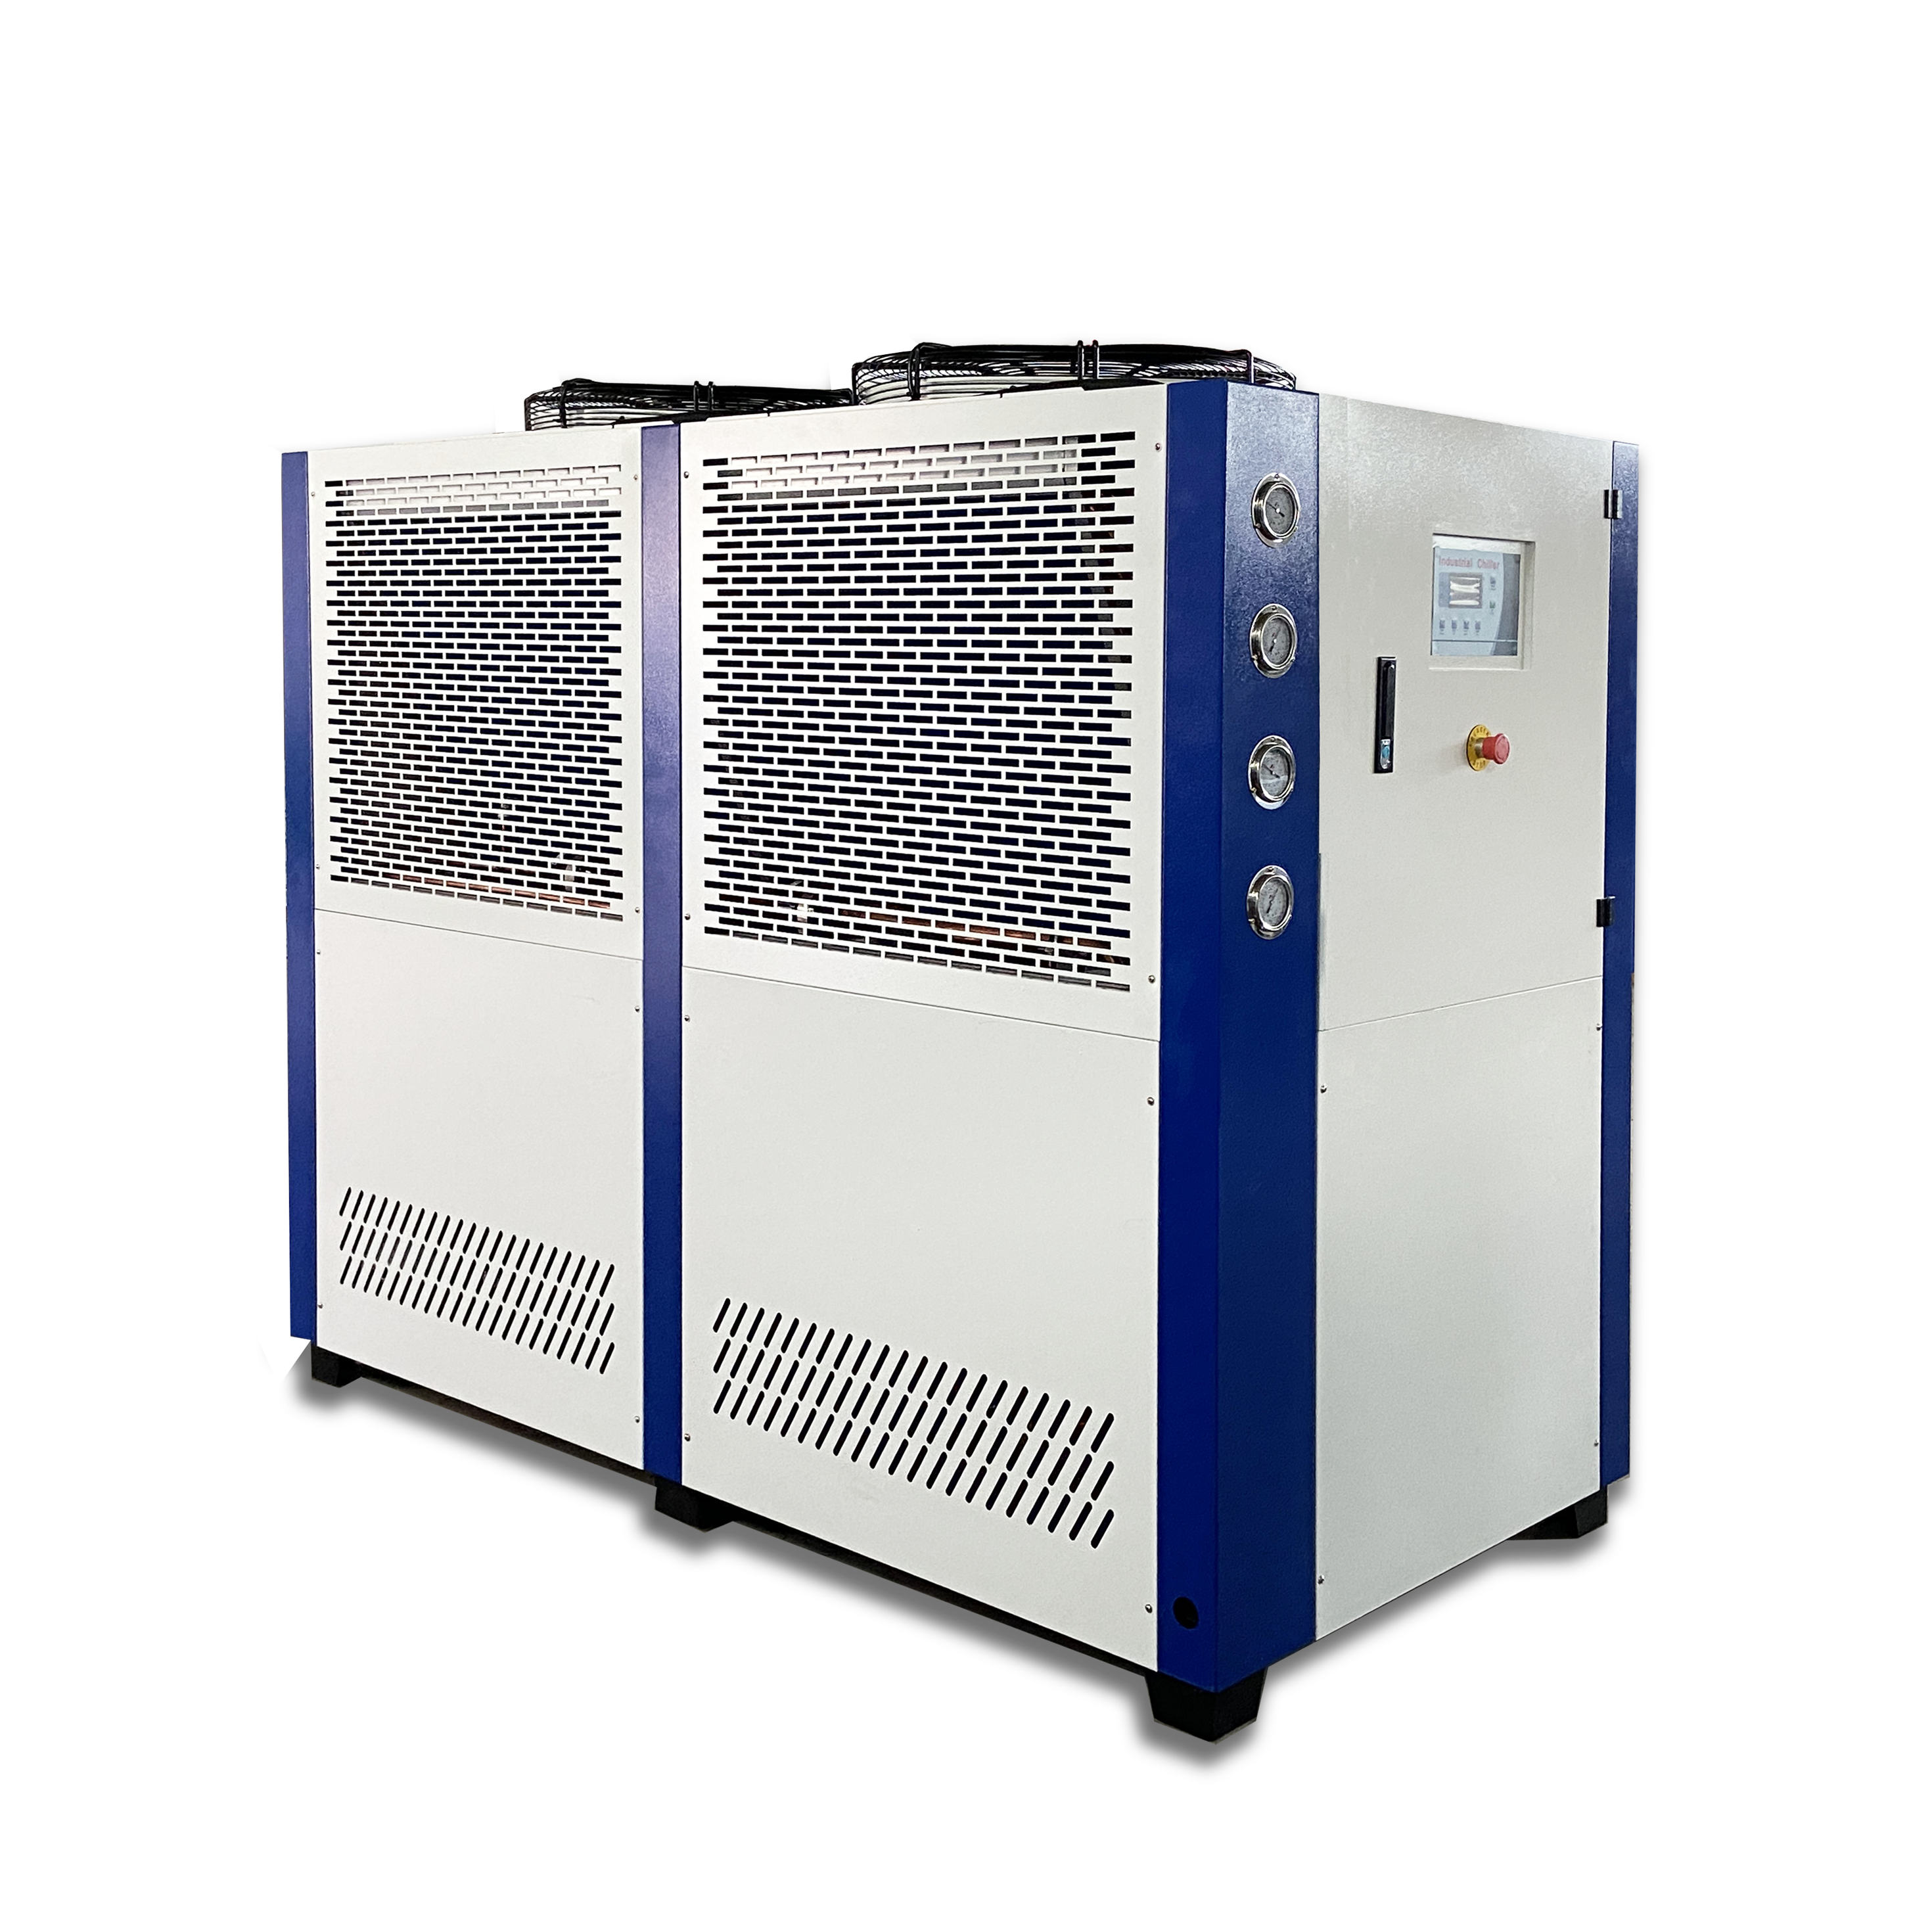 Comprar Enfriador de agua refrigerado por aire tipo scroll de 10hp 30kw para máquina de enfriamiento, Enfriador de agua refrigerado por aire tipo scroll de 10hp 30kw para máquina de enfriamiento Precios, Enfriador de agua refrigerado por aire tipo scroll de 10hp 30kw para máquina de enfriamiento Marcas, Enfriador de agua refrigerado por aire tipo scroll de 10hp 30kw para máquina de enfriamiento Fabricante, Enfriador de agua refrigerado por aire tipo scroll de 10hp 30kw para máquina de enfriamiento Citas, Enfriador de agua refrigerado por aire tipo scroll de 10hp 30kw para máquina de enfriamiento Empresa.